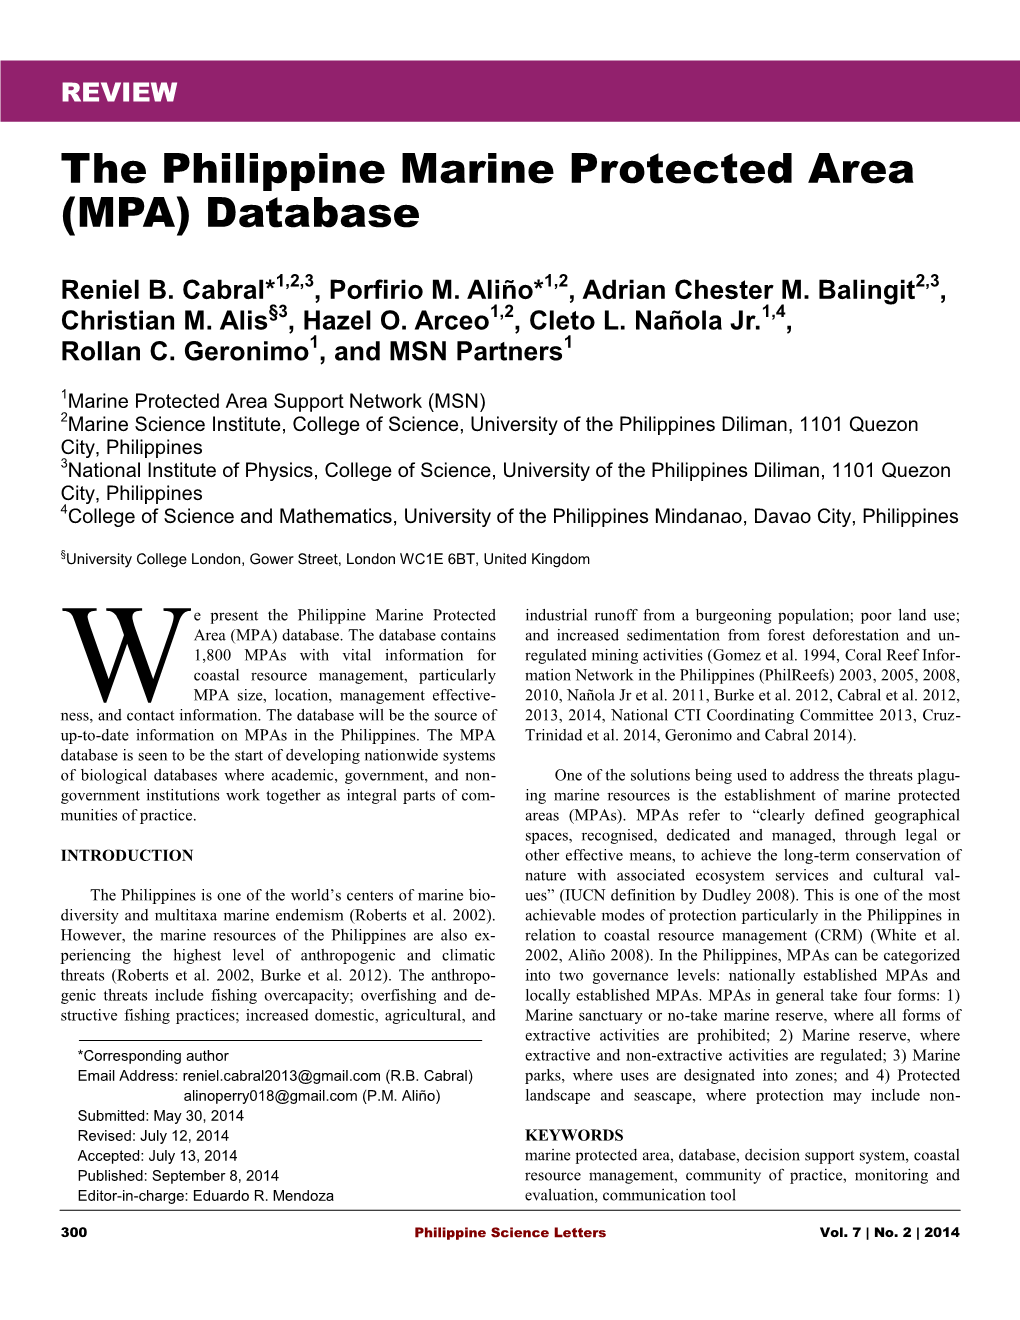 The Philippine Marine Protected Area (MPA) Database